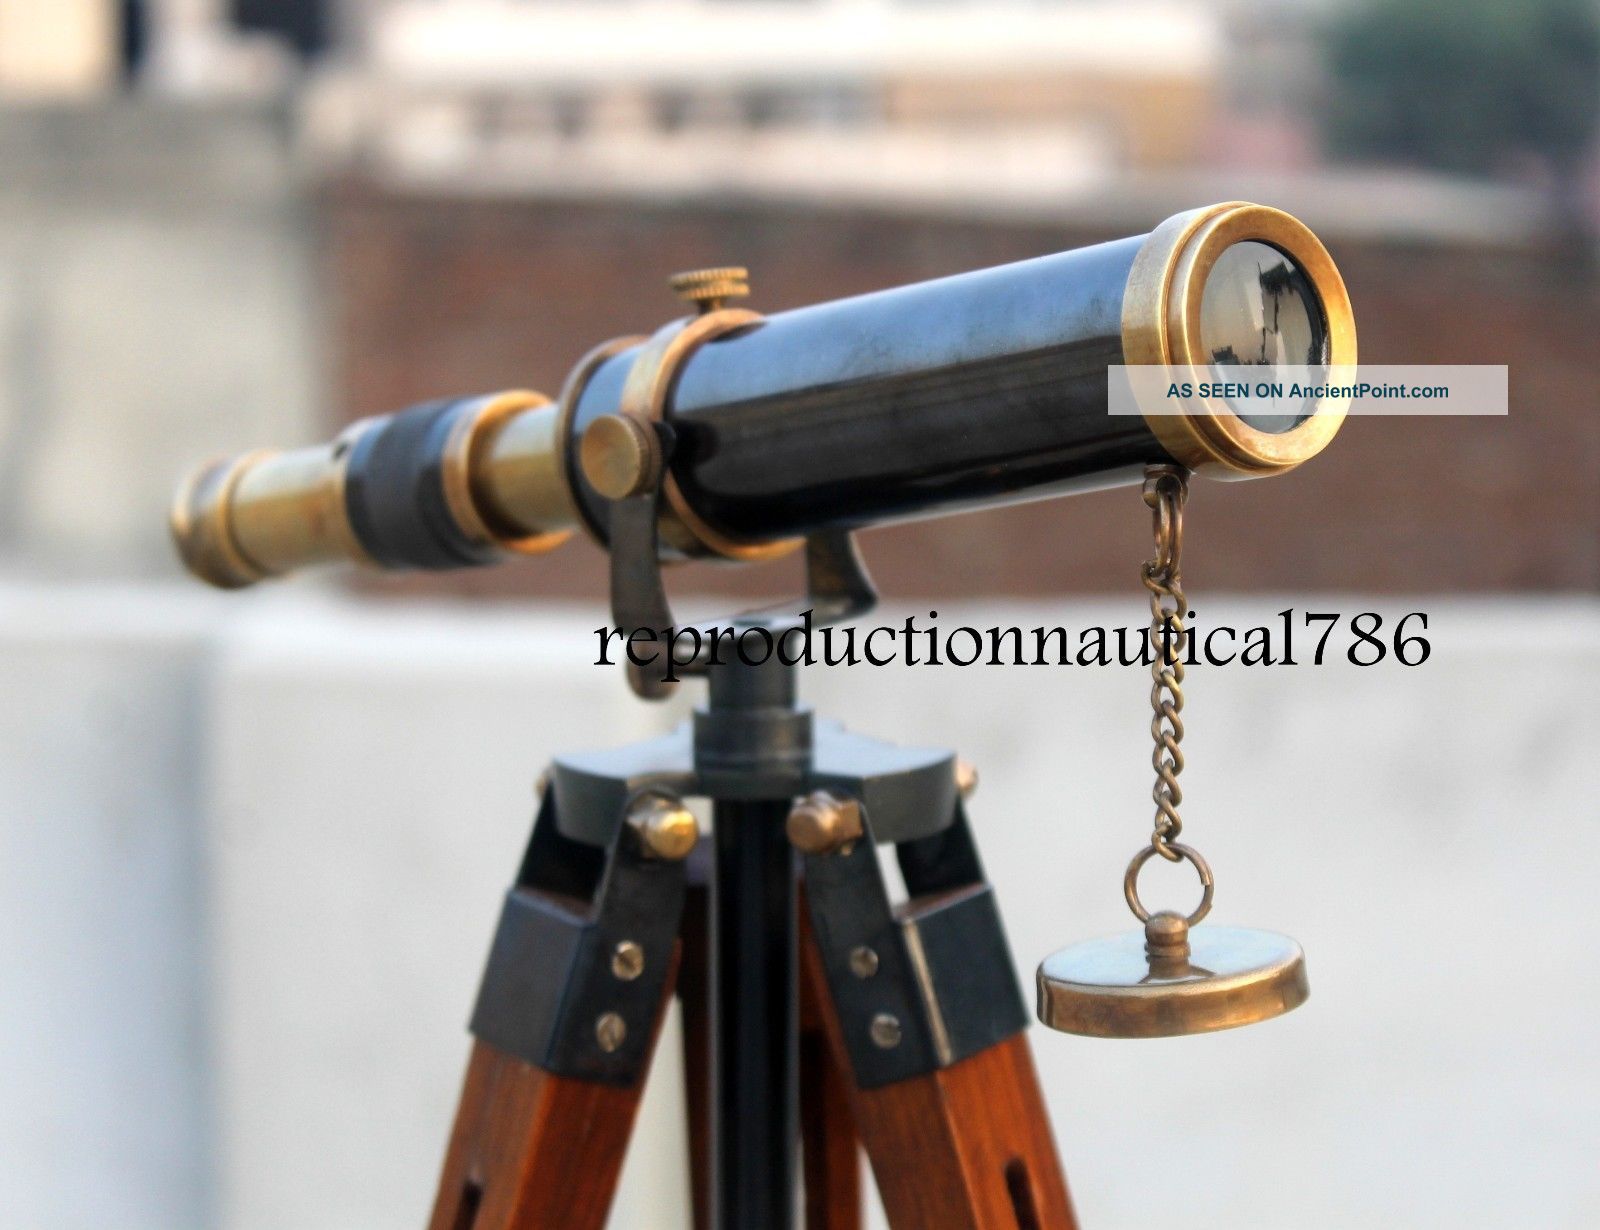 Nautical Design Antique Brass Spyglass Telescope With Wooden Tripod Marine Scope Telescopes photo